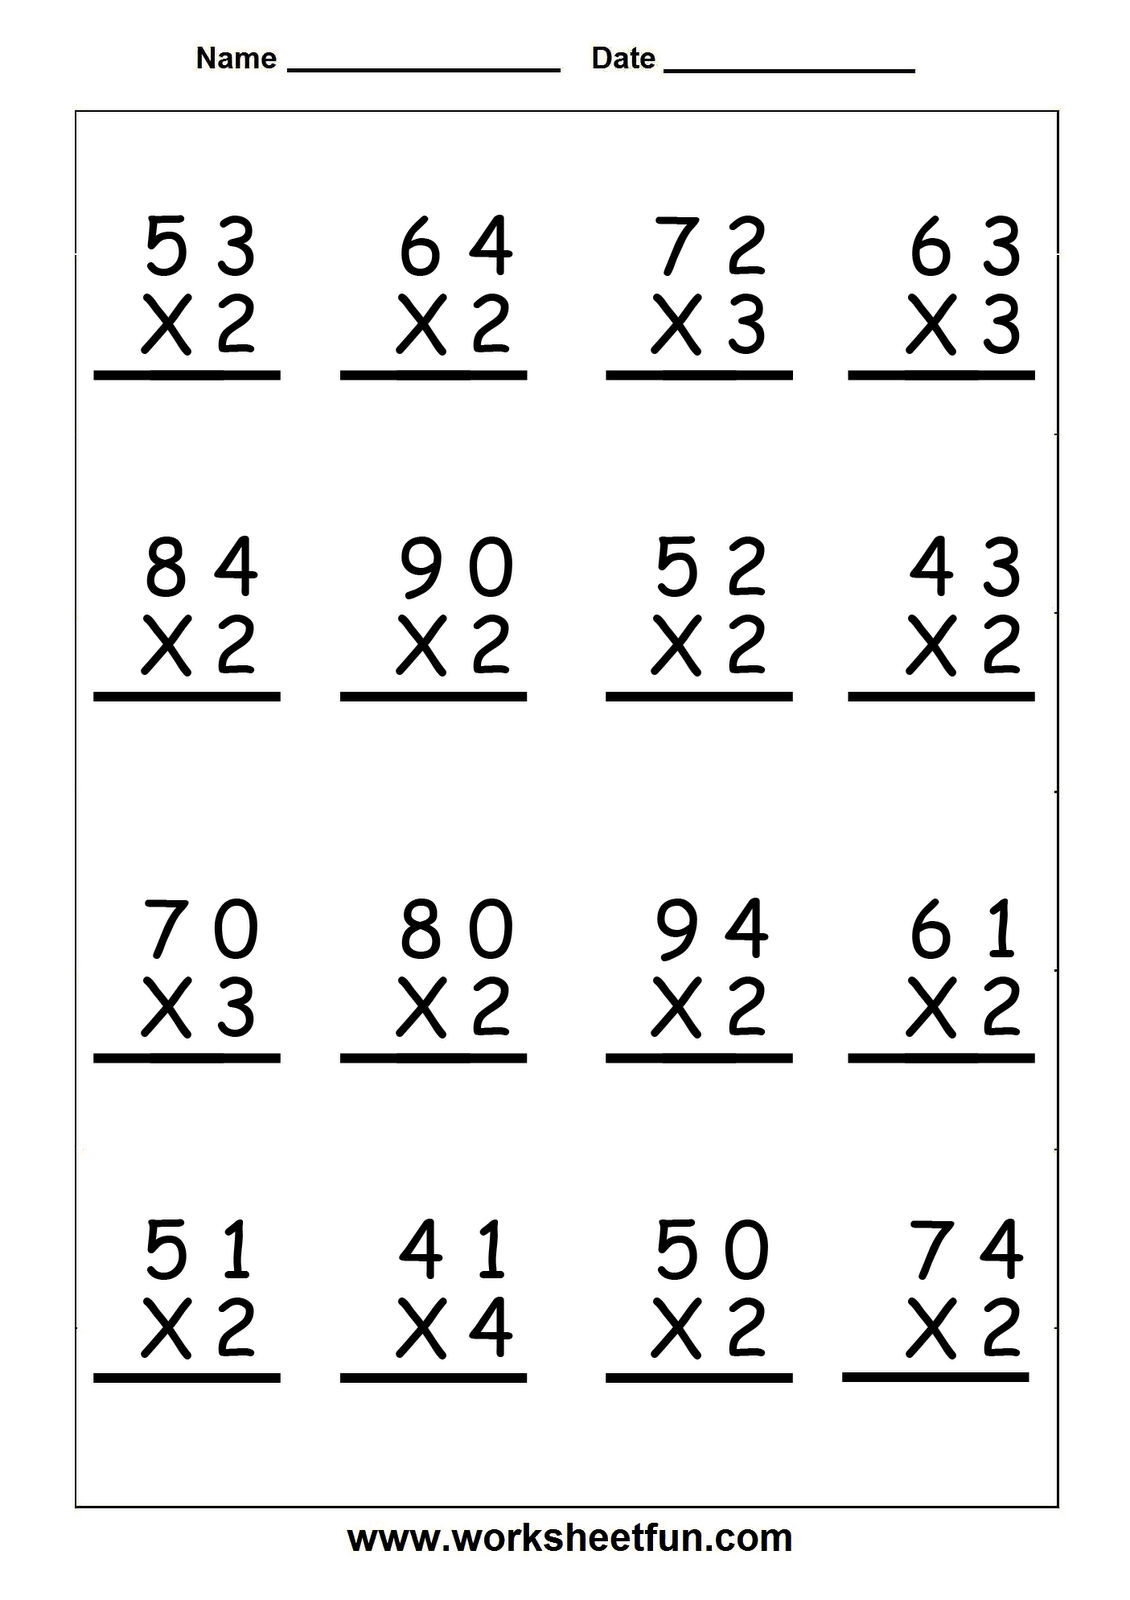 multiplication-worksheets-ks2-year-5-printable-multiplication-flash-cards